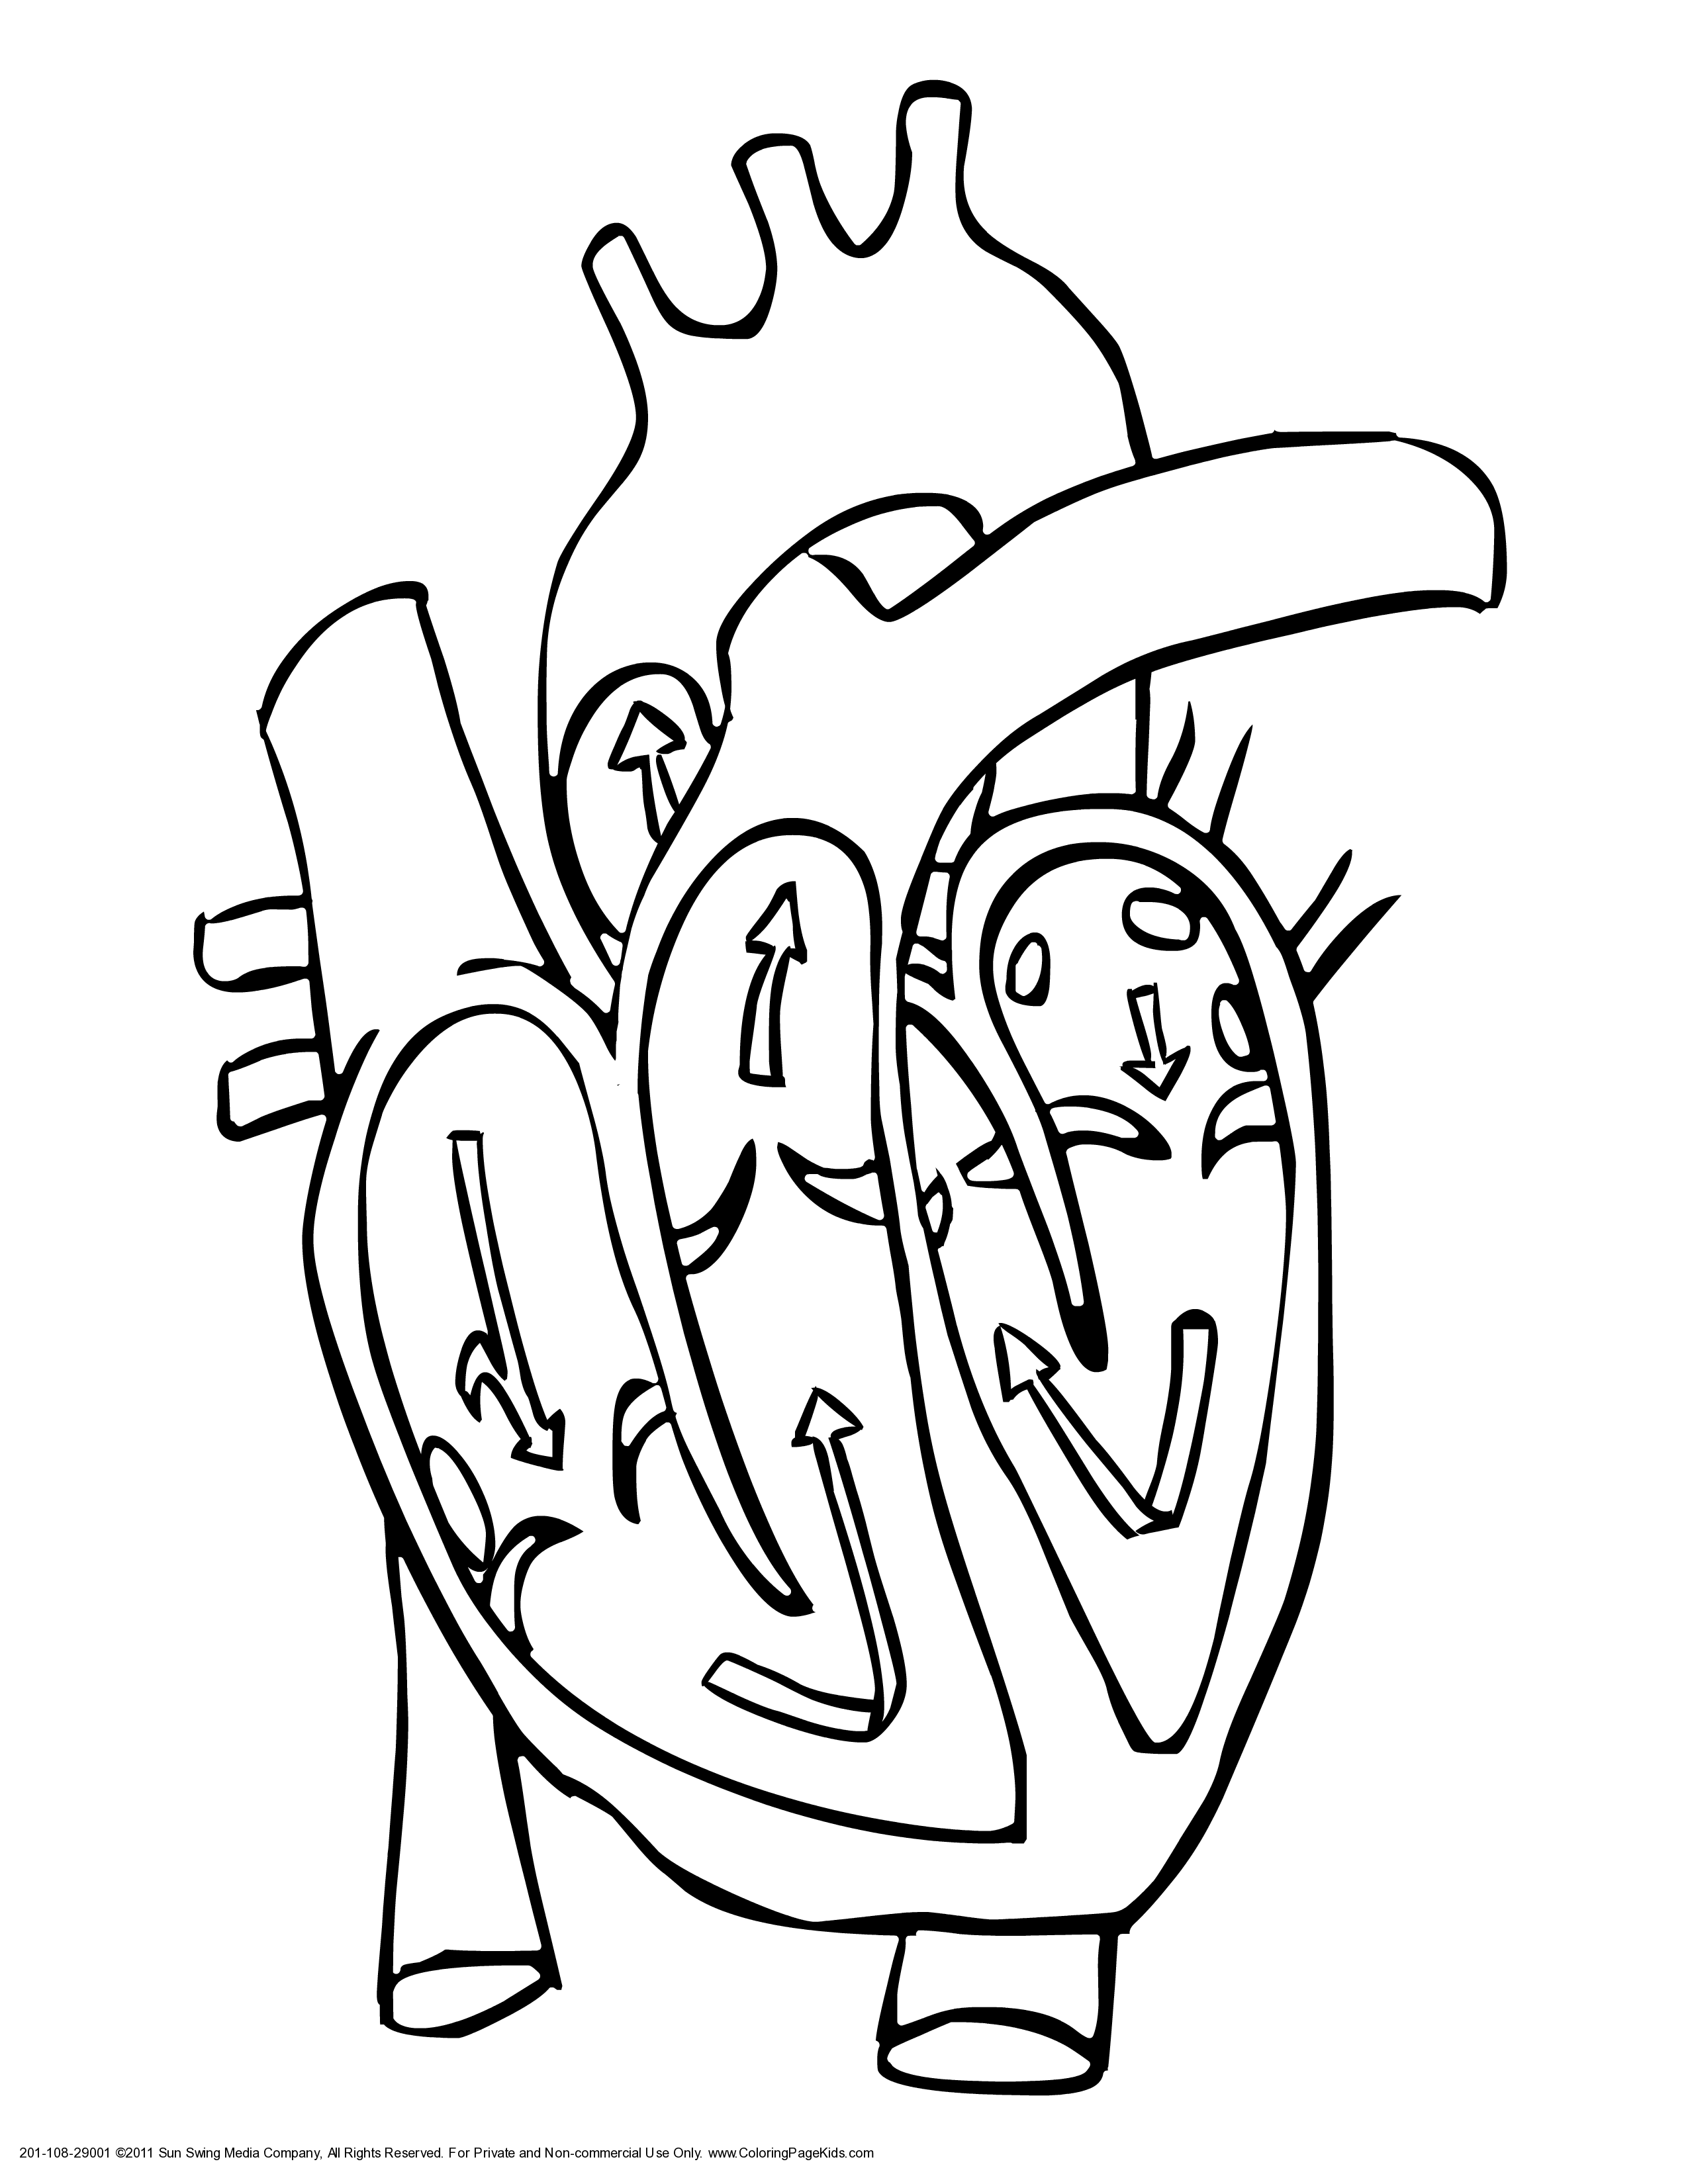 Human heart clip art vector free clipart images - FamClipart